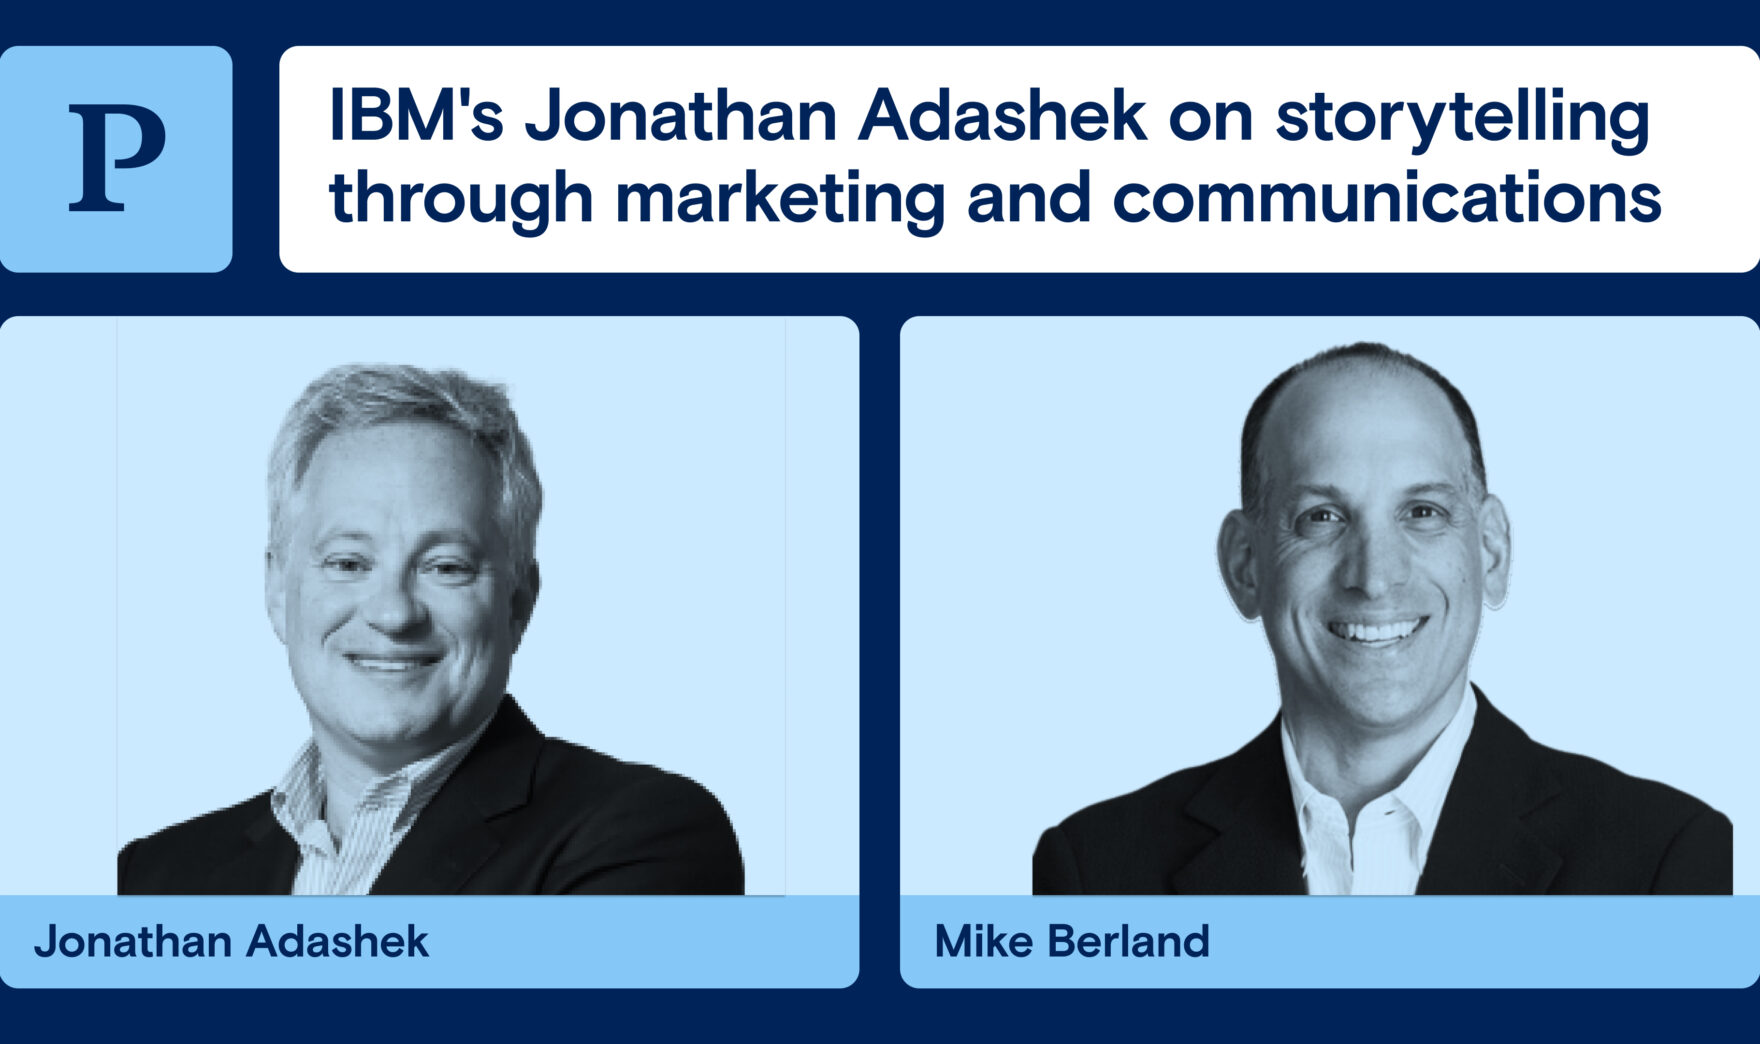 IBM’s Jonathan Adashek on storytelling through marketing and communications